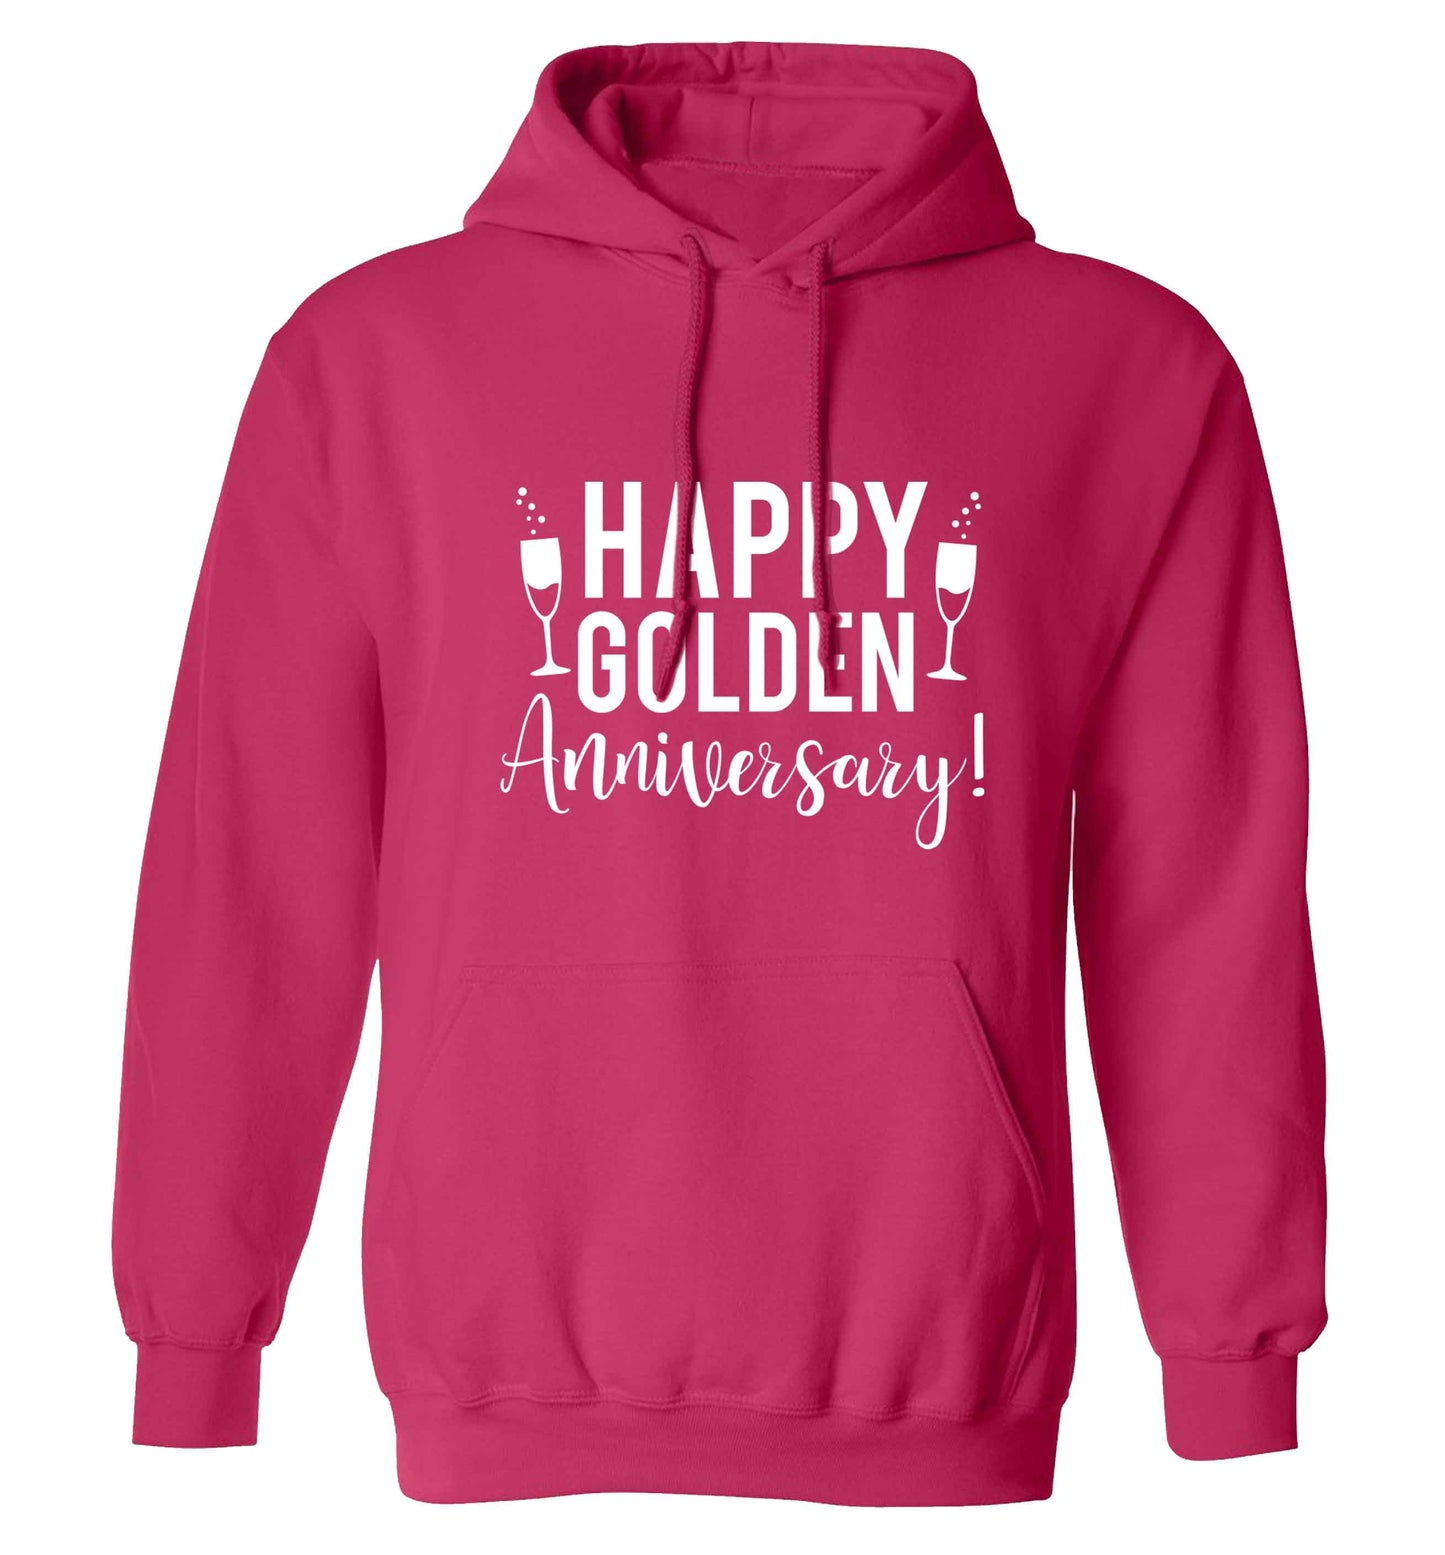 Happy golden anniversary! adults unisex pink hoodie 2XL